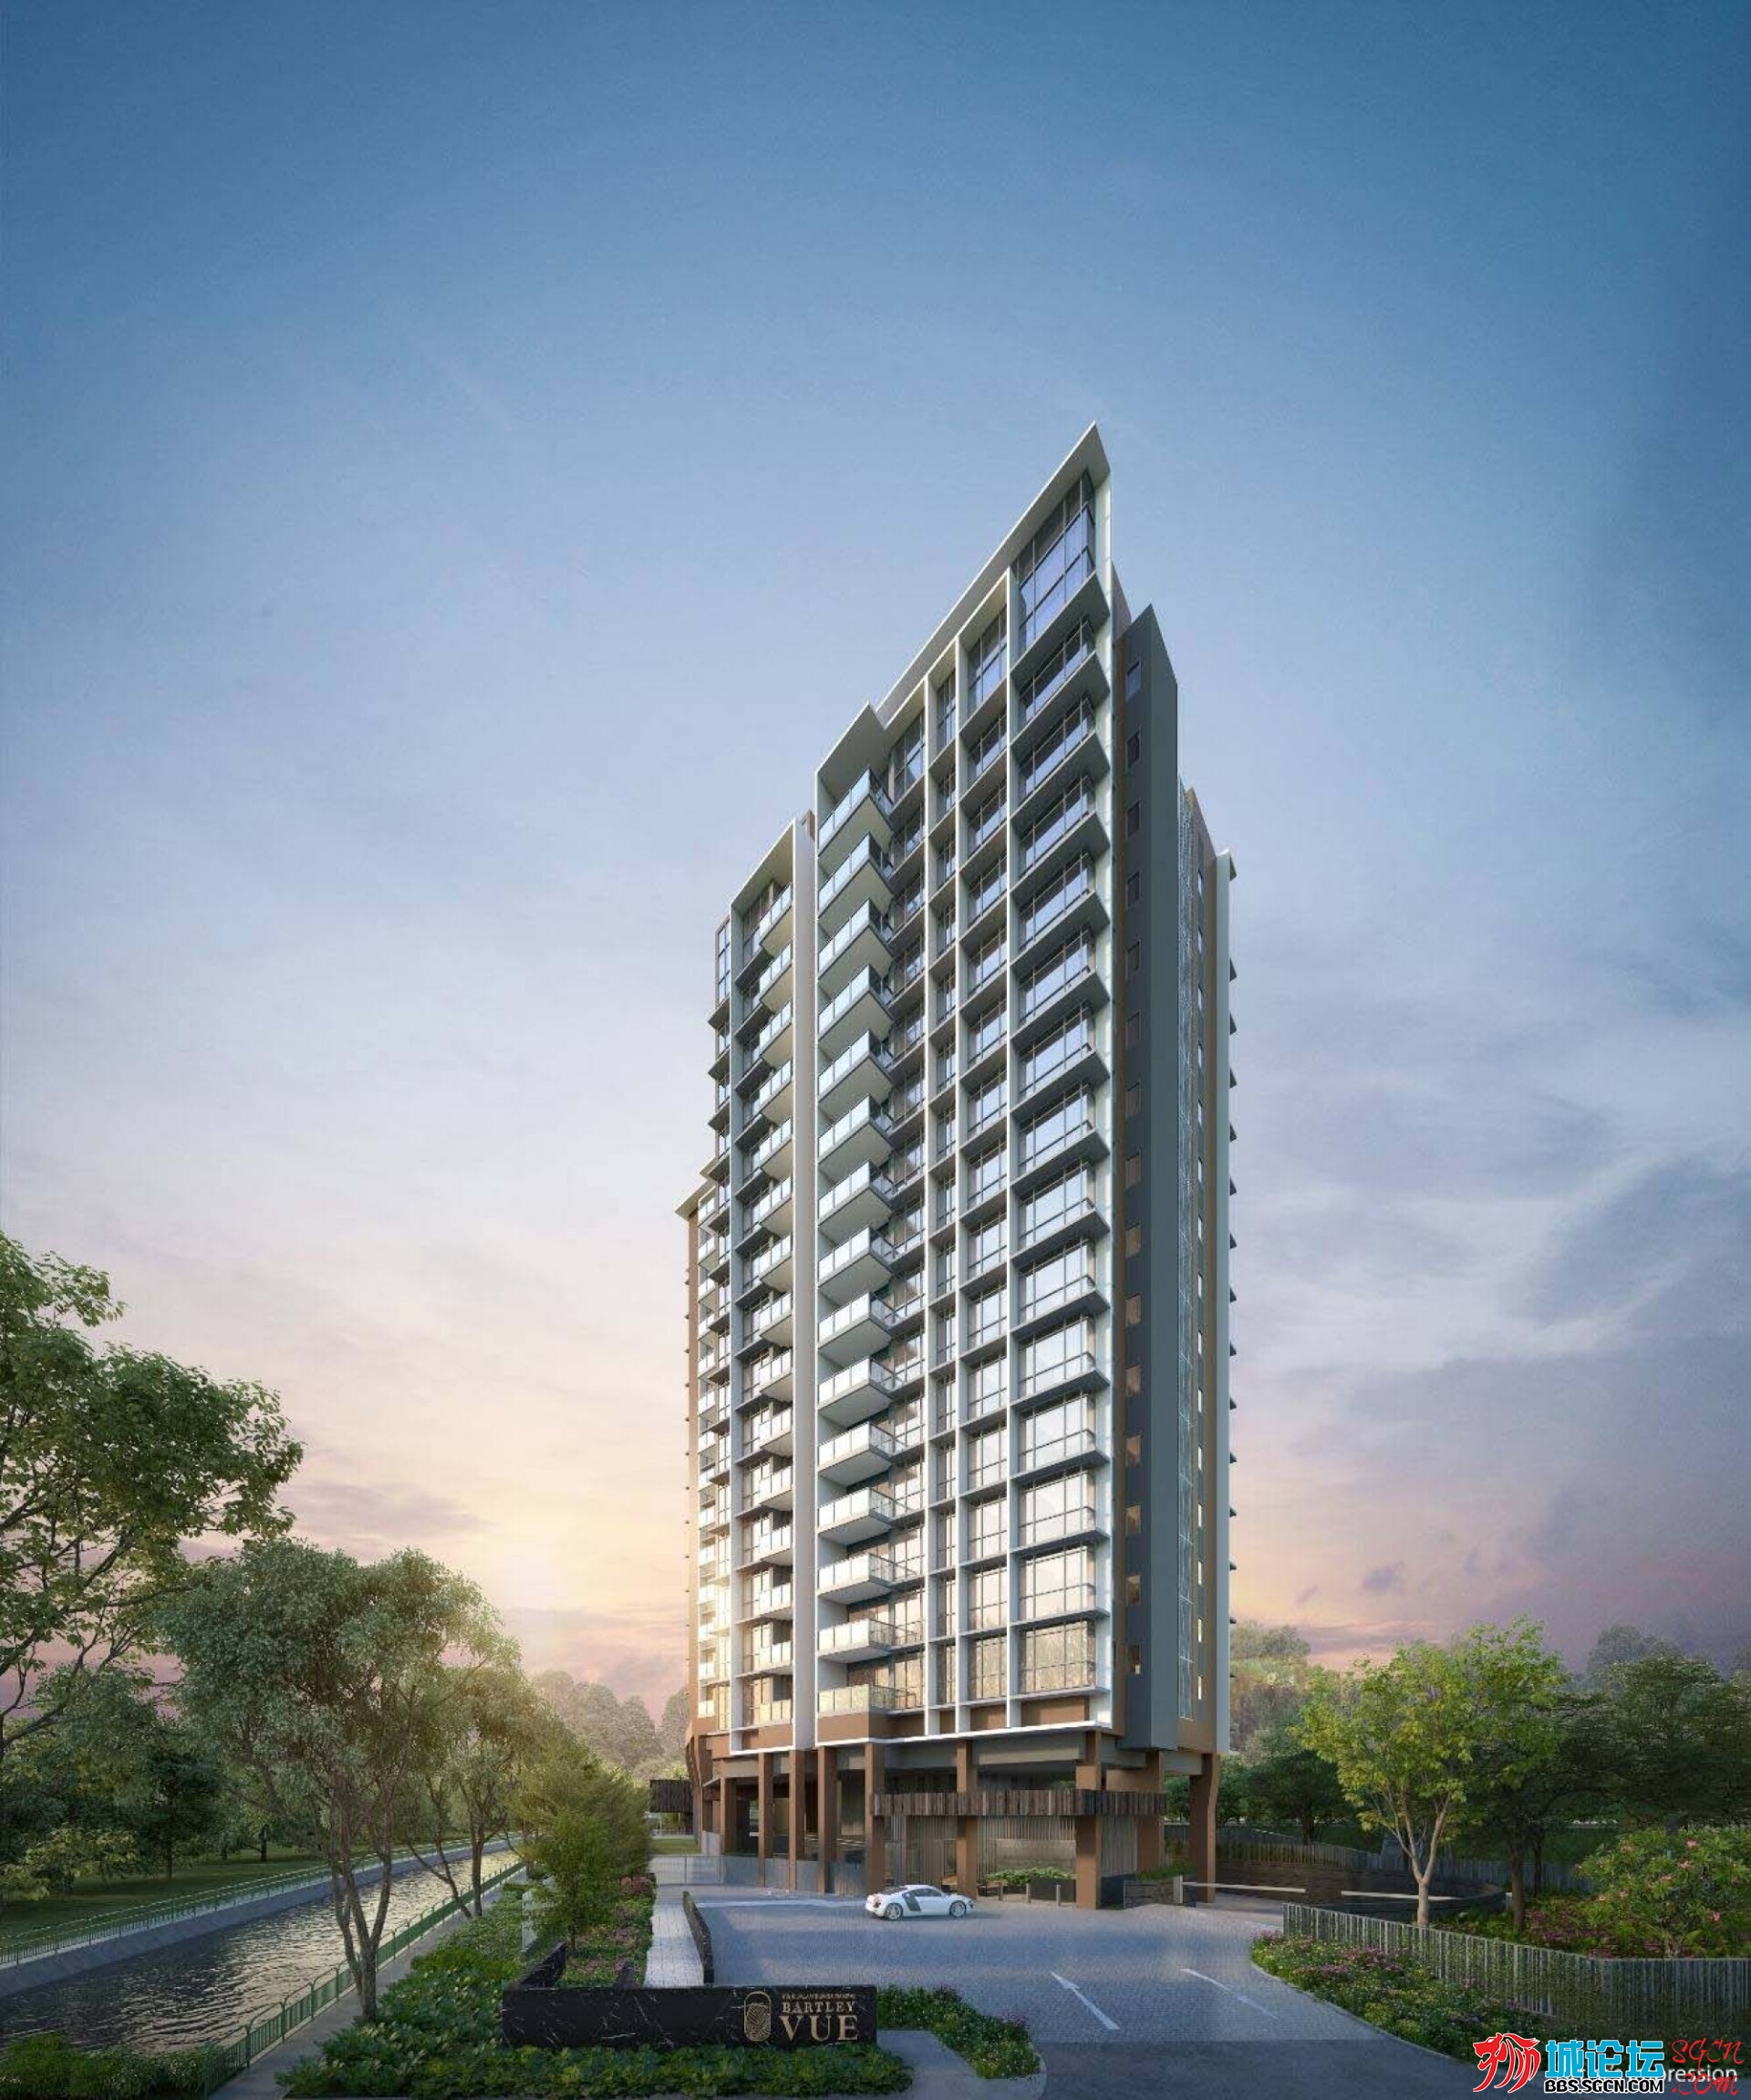 bartley-vue-photo-singapore-new-launch-condominium-77bcce1e893845462453eb4ac7de0b3e.jpg